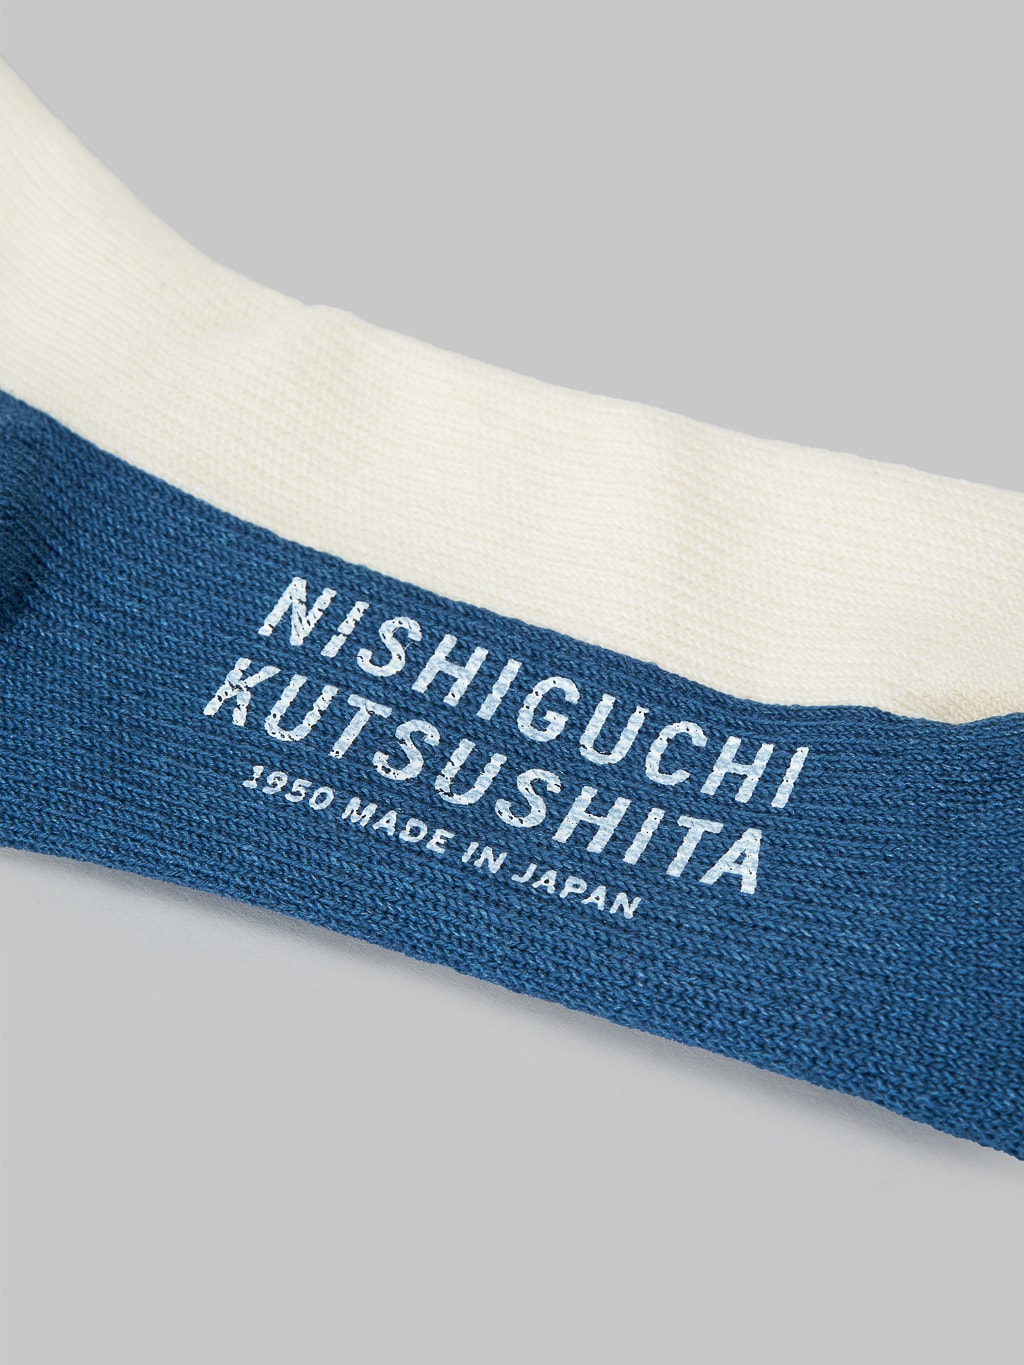 Nishiguchi Kutsushita Wool Pile Walk Socks Ivory brand logo stamped